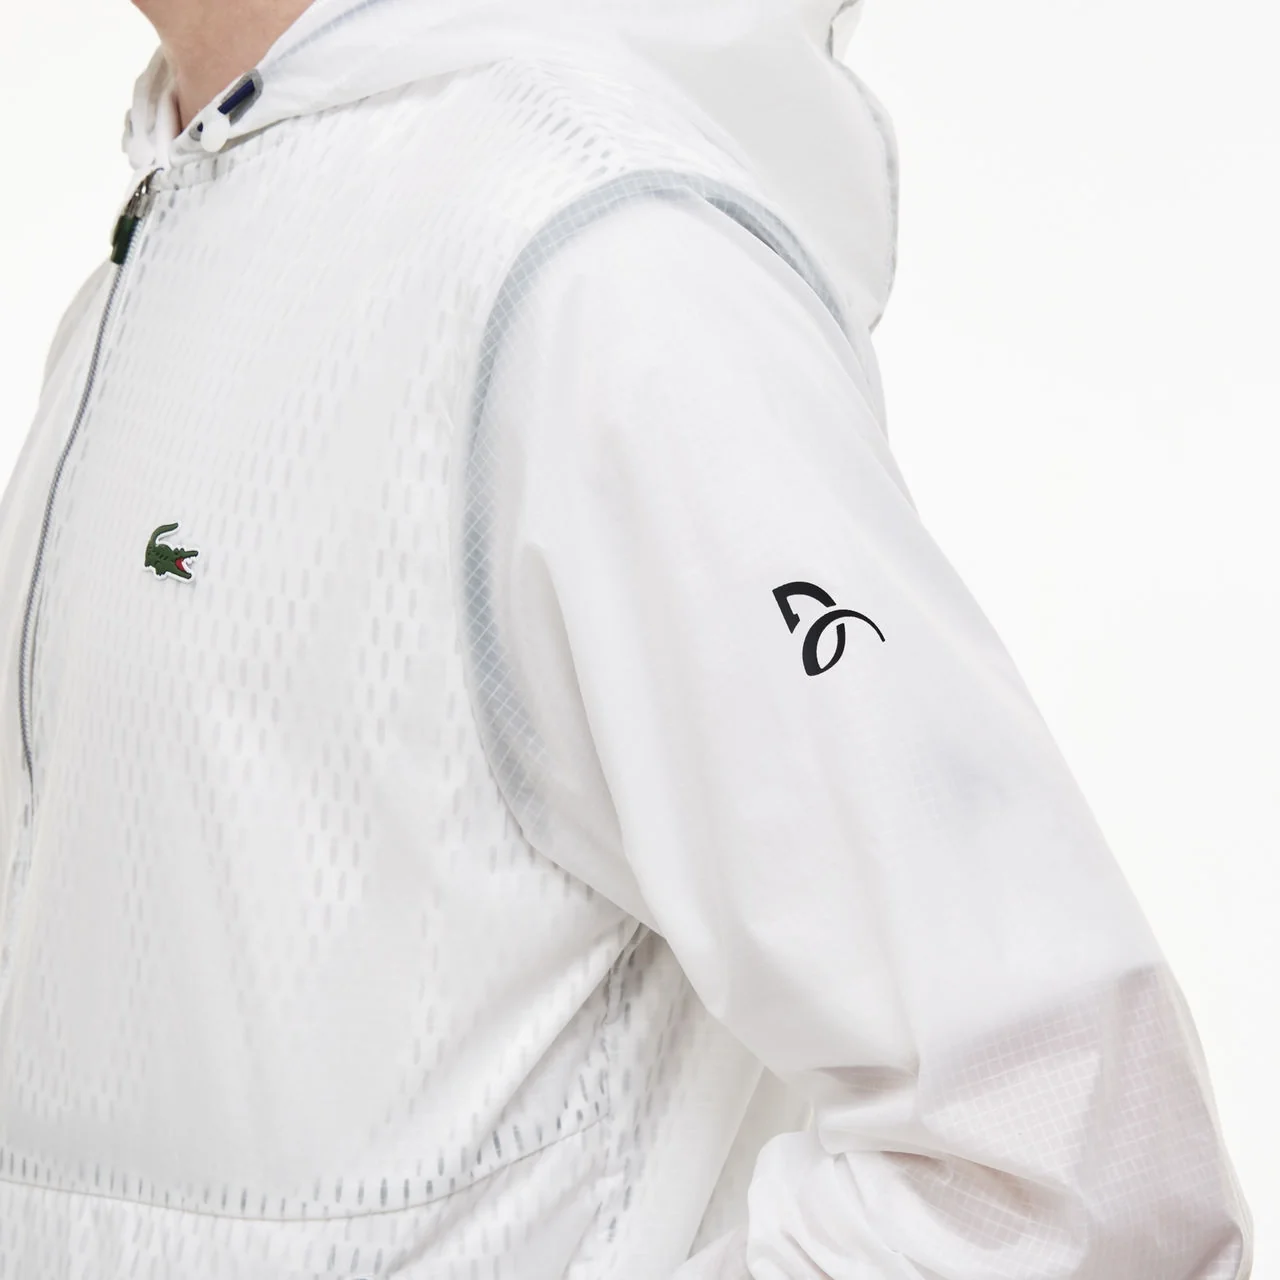 Lacoste Novak Djokovic Jacket Exclusive Edition White